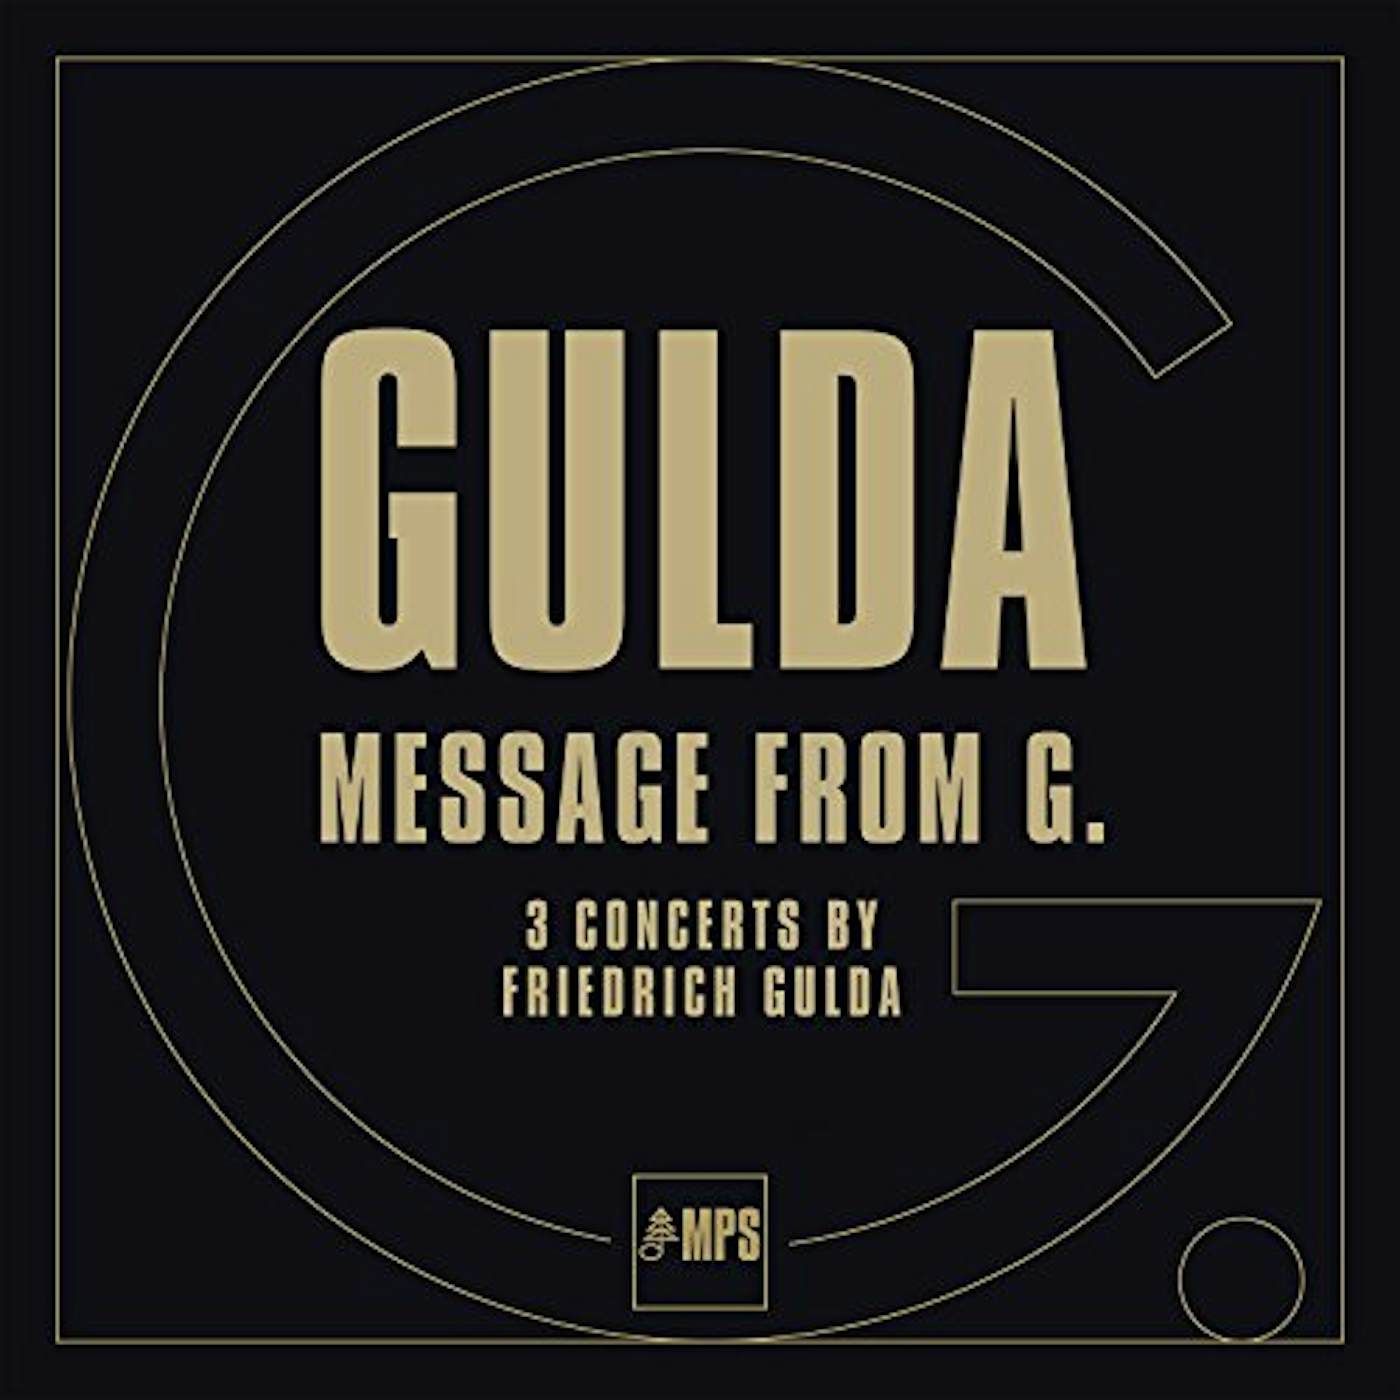 FRIEDRICH GULDA: MESSAGE FROM G Vinyl Record